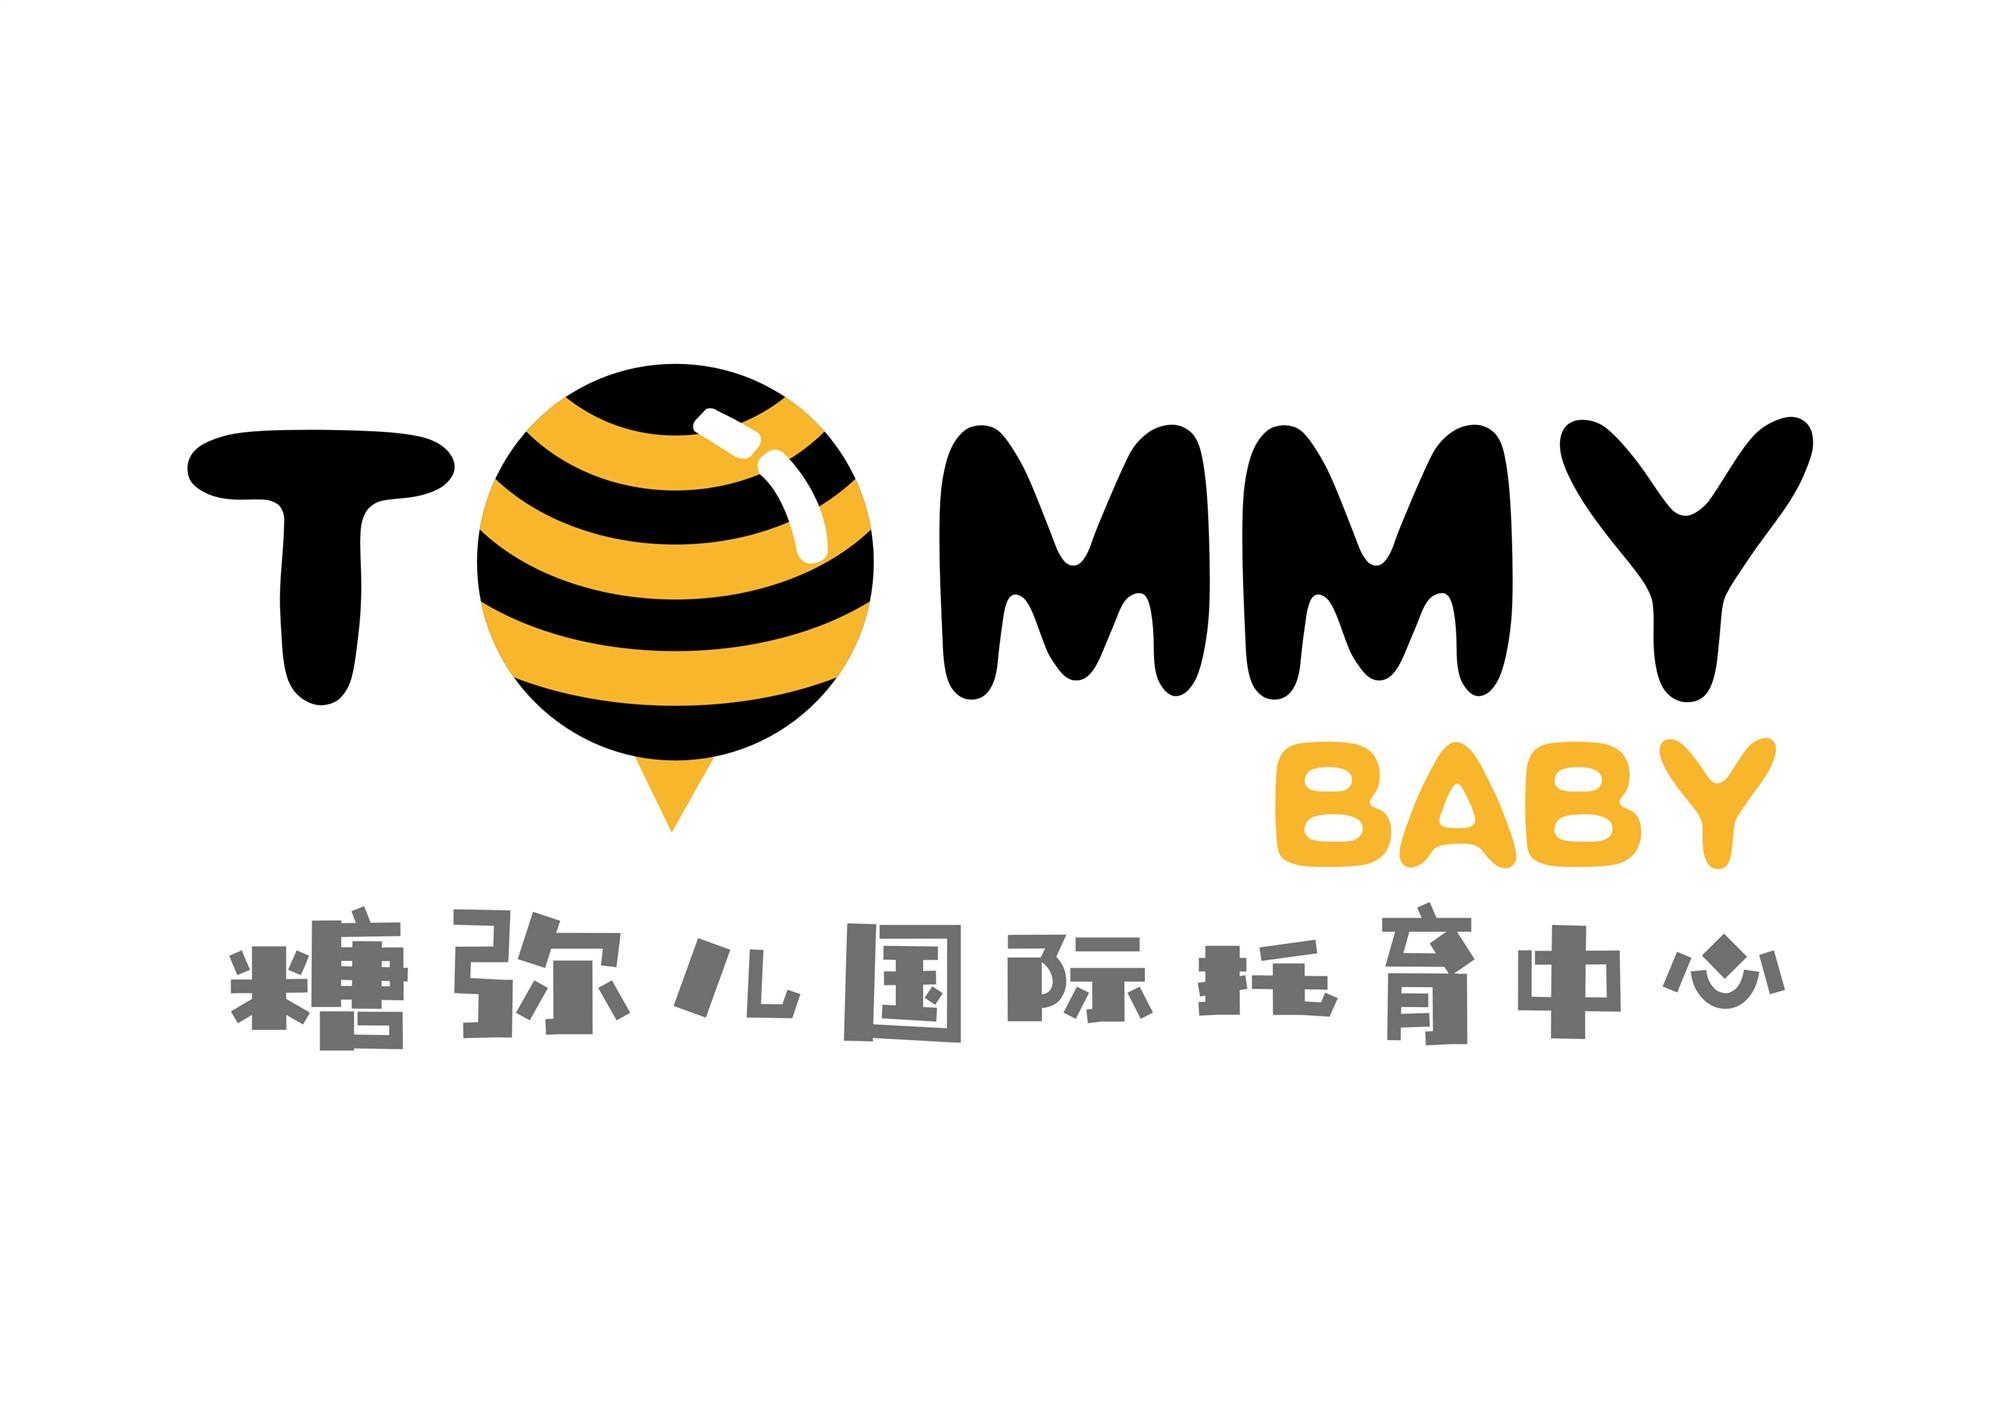 糖弥儿国际托育中心  em>tommy /em>  em>baby /em>